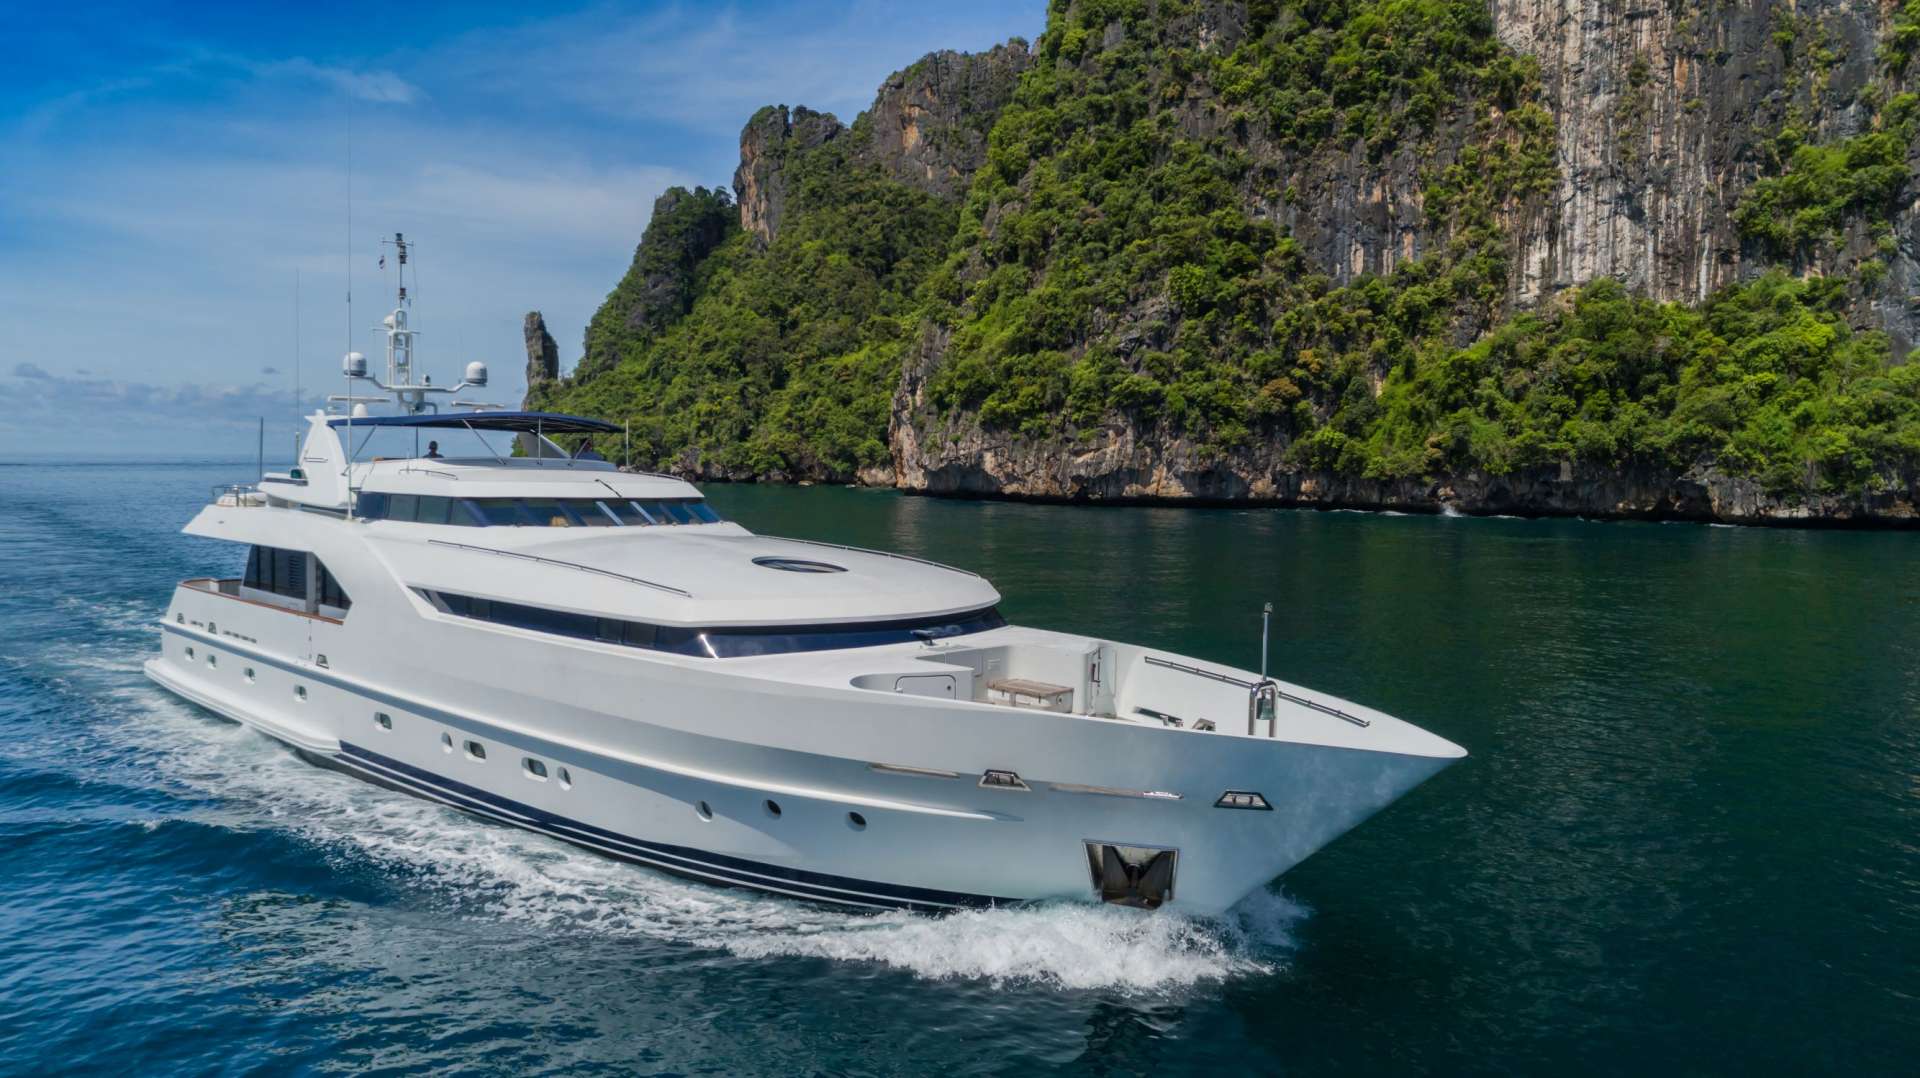 xanadu of london - Motor Boat Charter Thailand & Boat hire in SE Asia 1